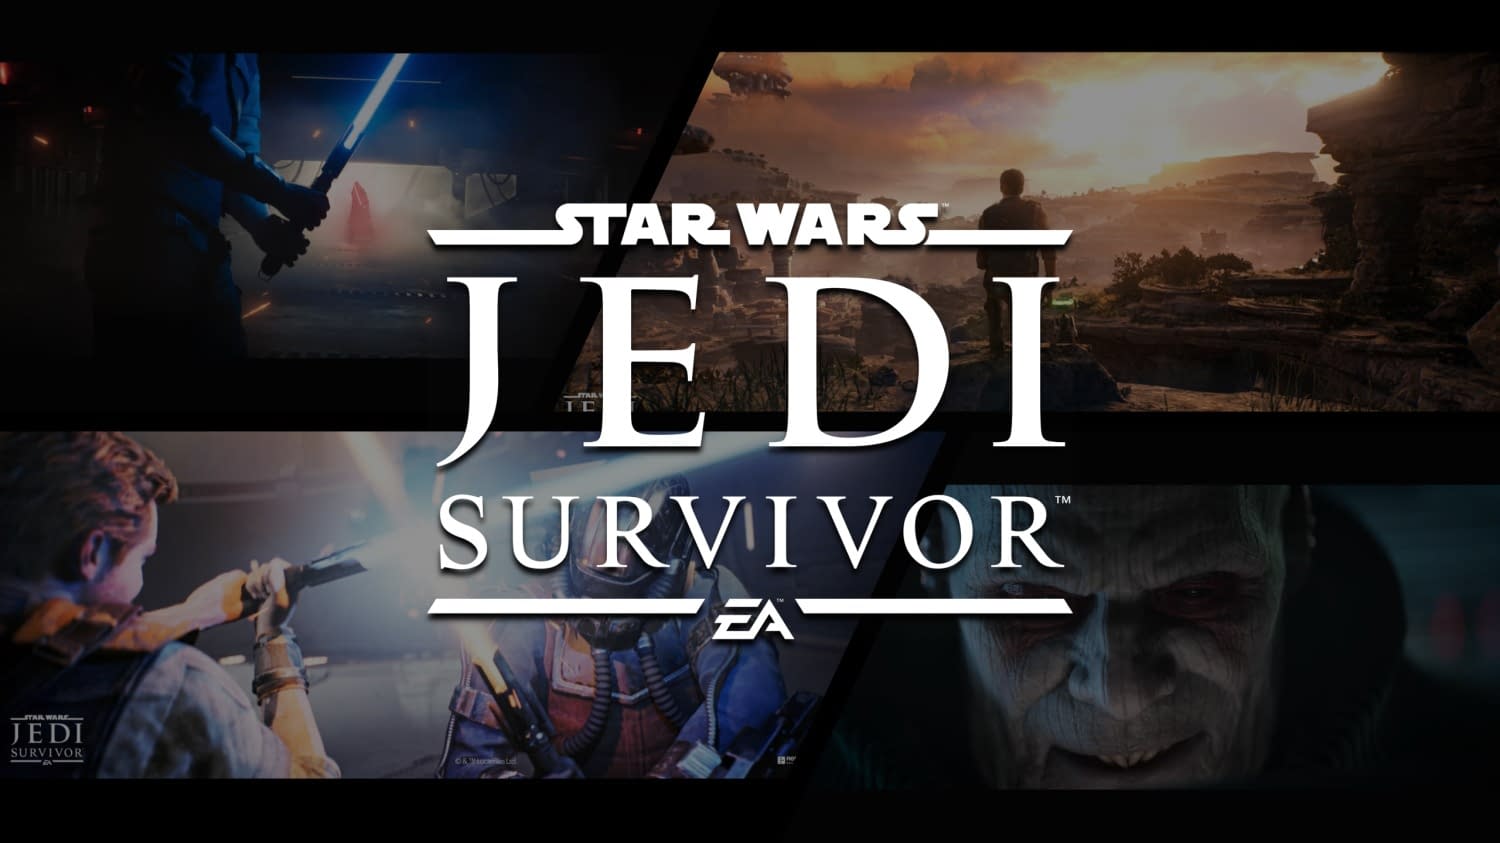 Star Wars Jedi: Survivor’s PC system requirements are announced